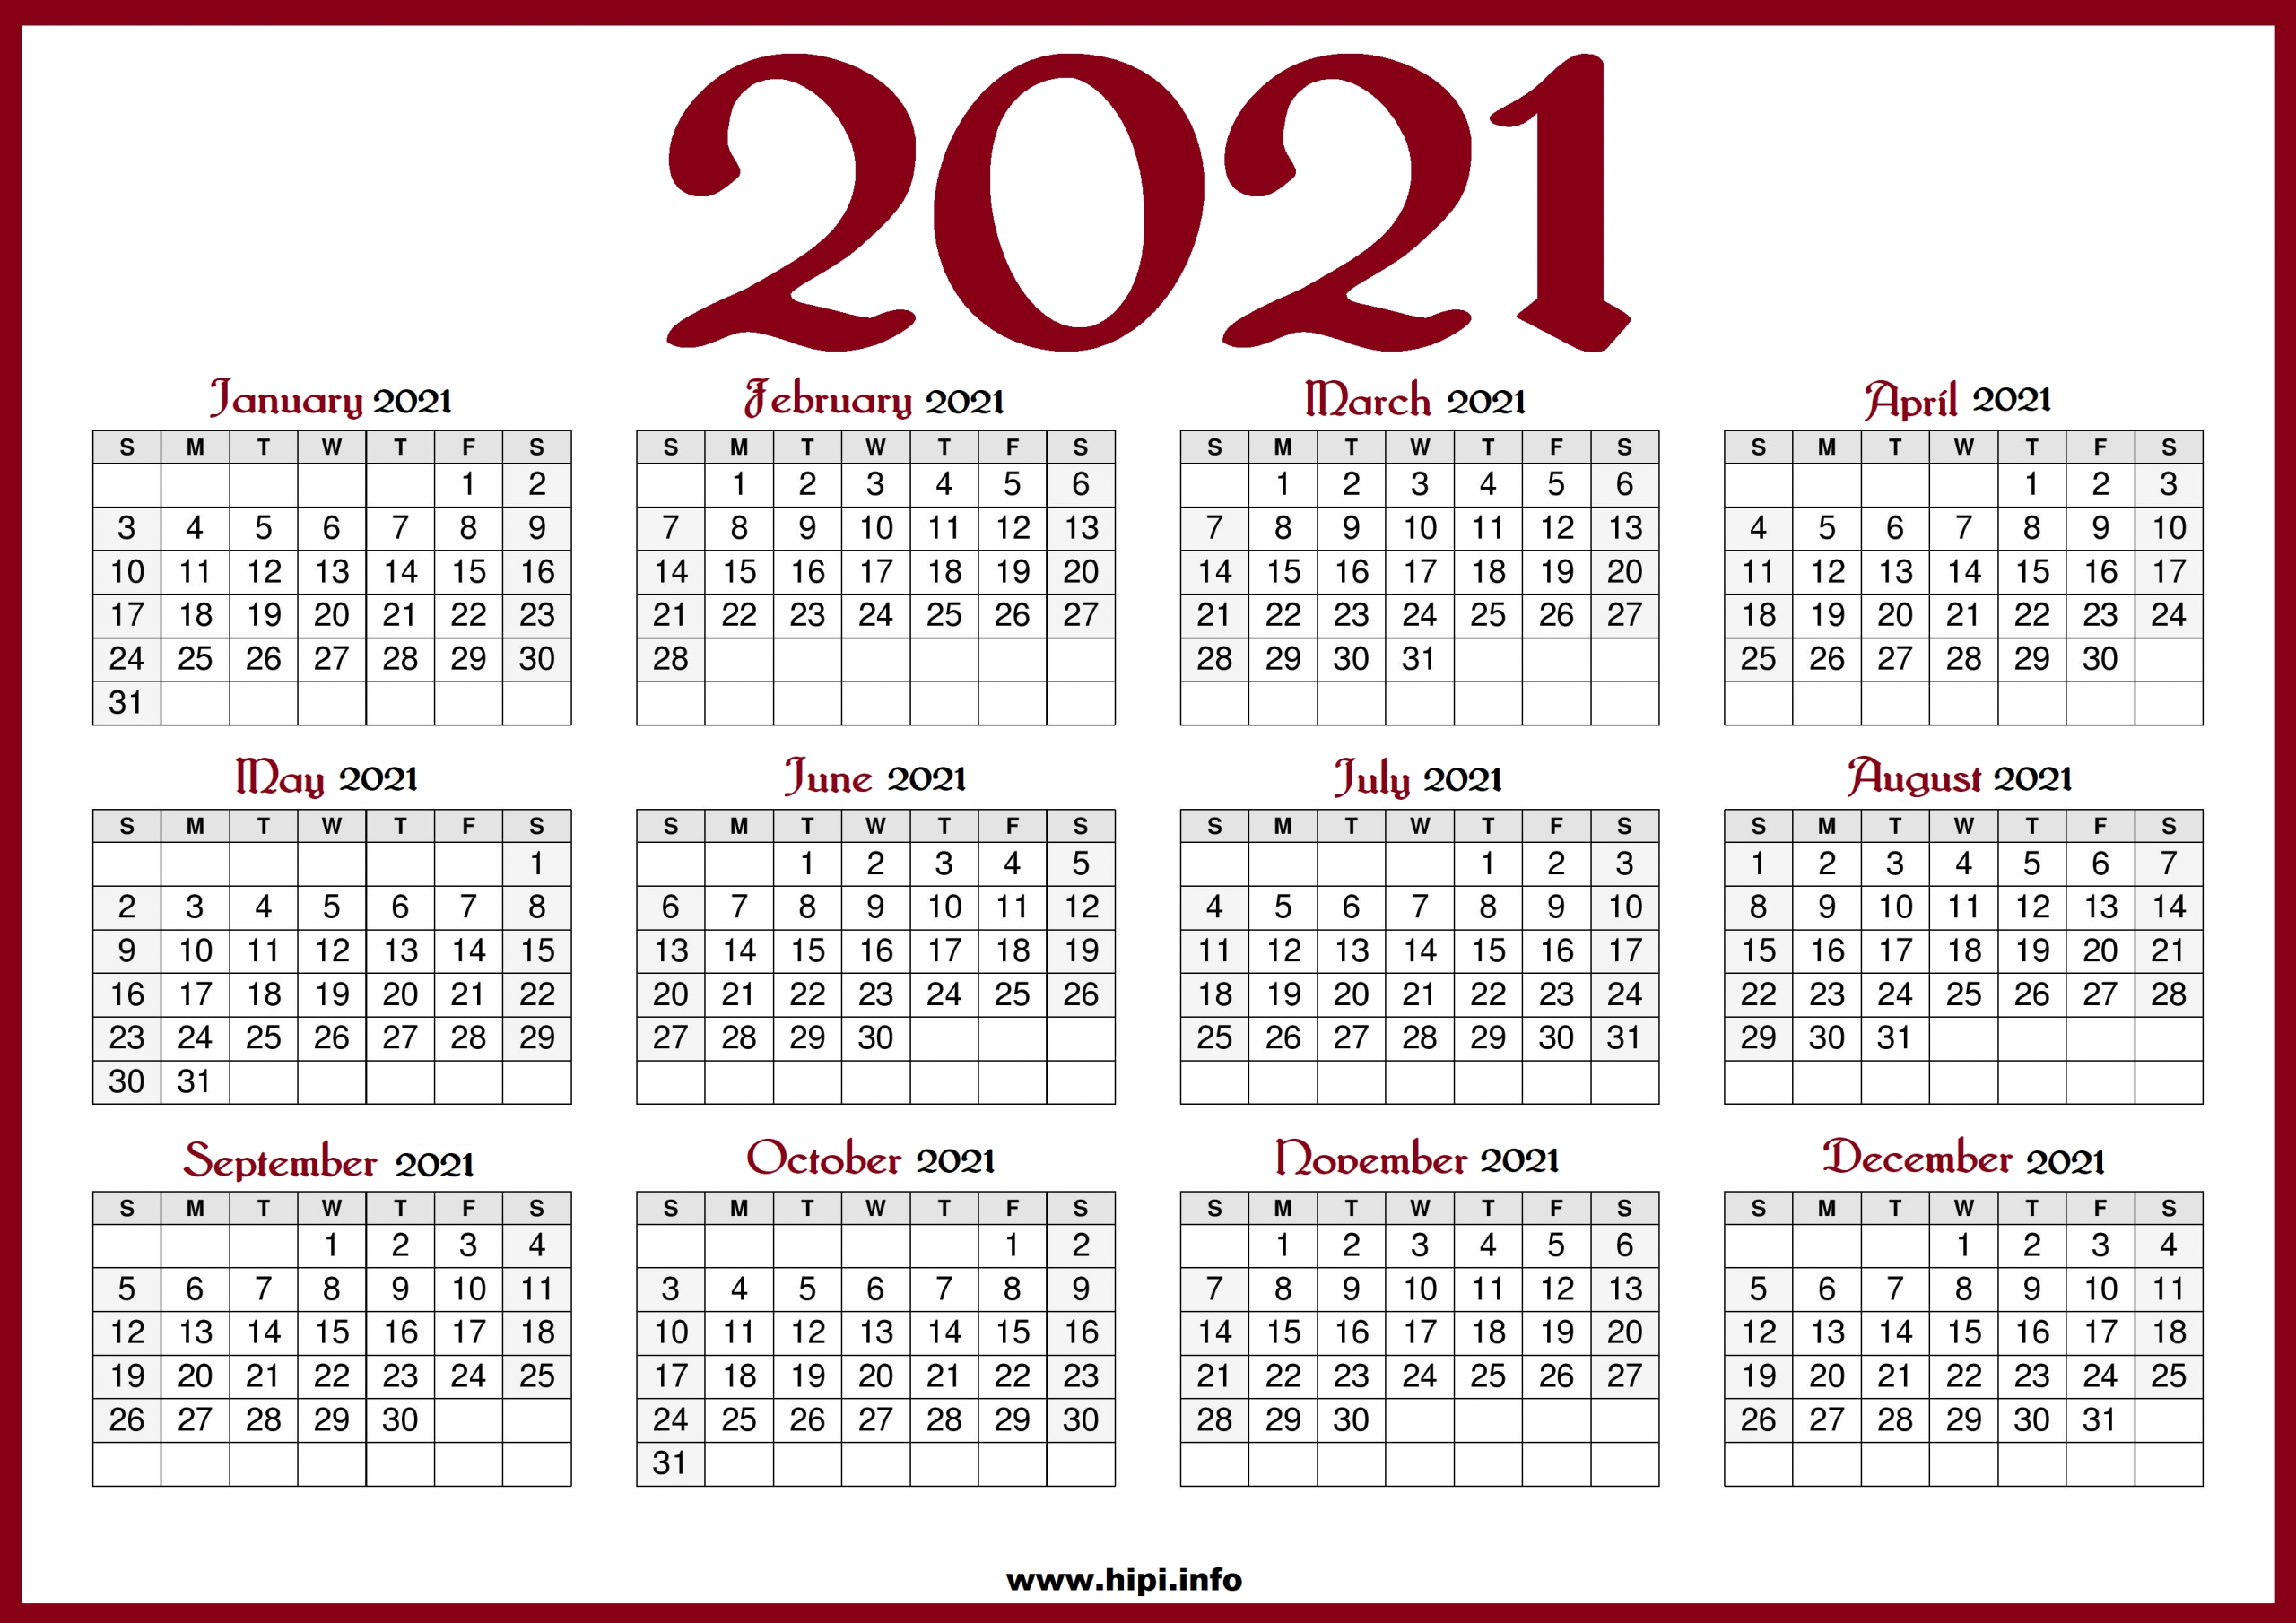 2021 Calendar Wallpapers - Top Free 2021 Calendar-2021 Calendar With Holidays Listed